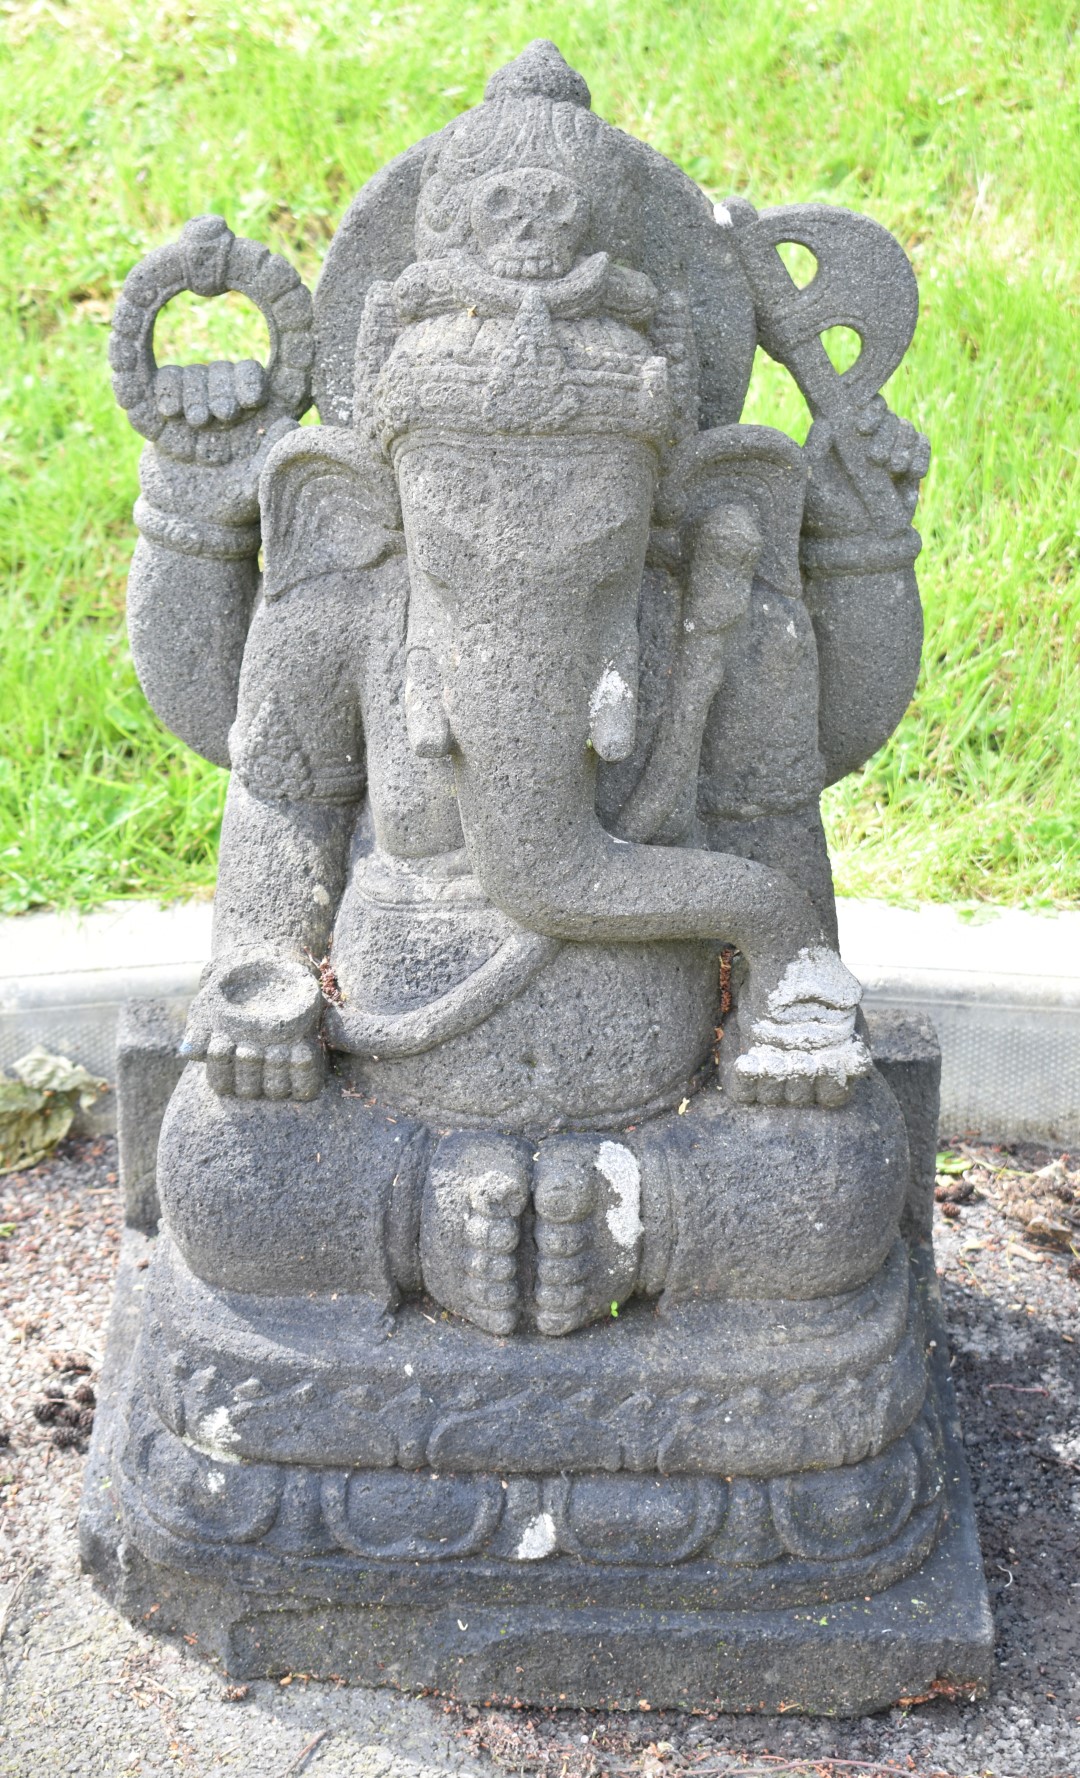 Lava stone sculpture elephant deity, from the Borobadur temple area, Java, Indonesia, height 82cm